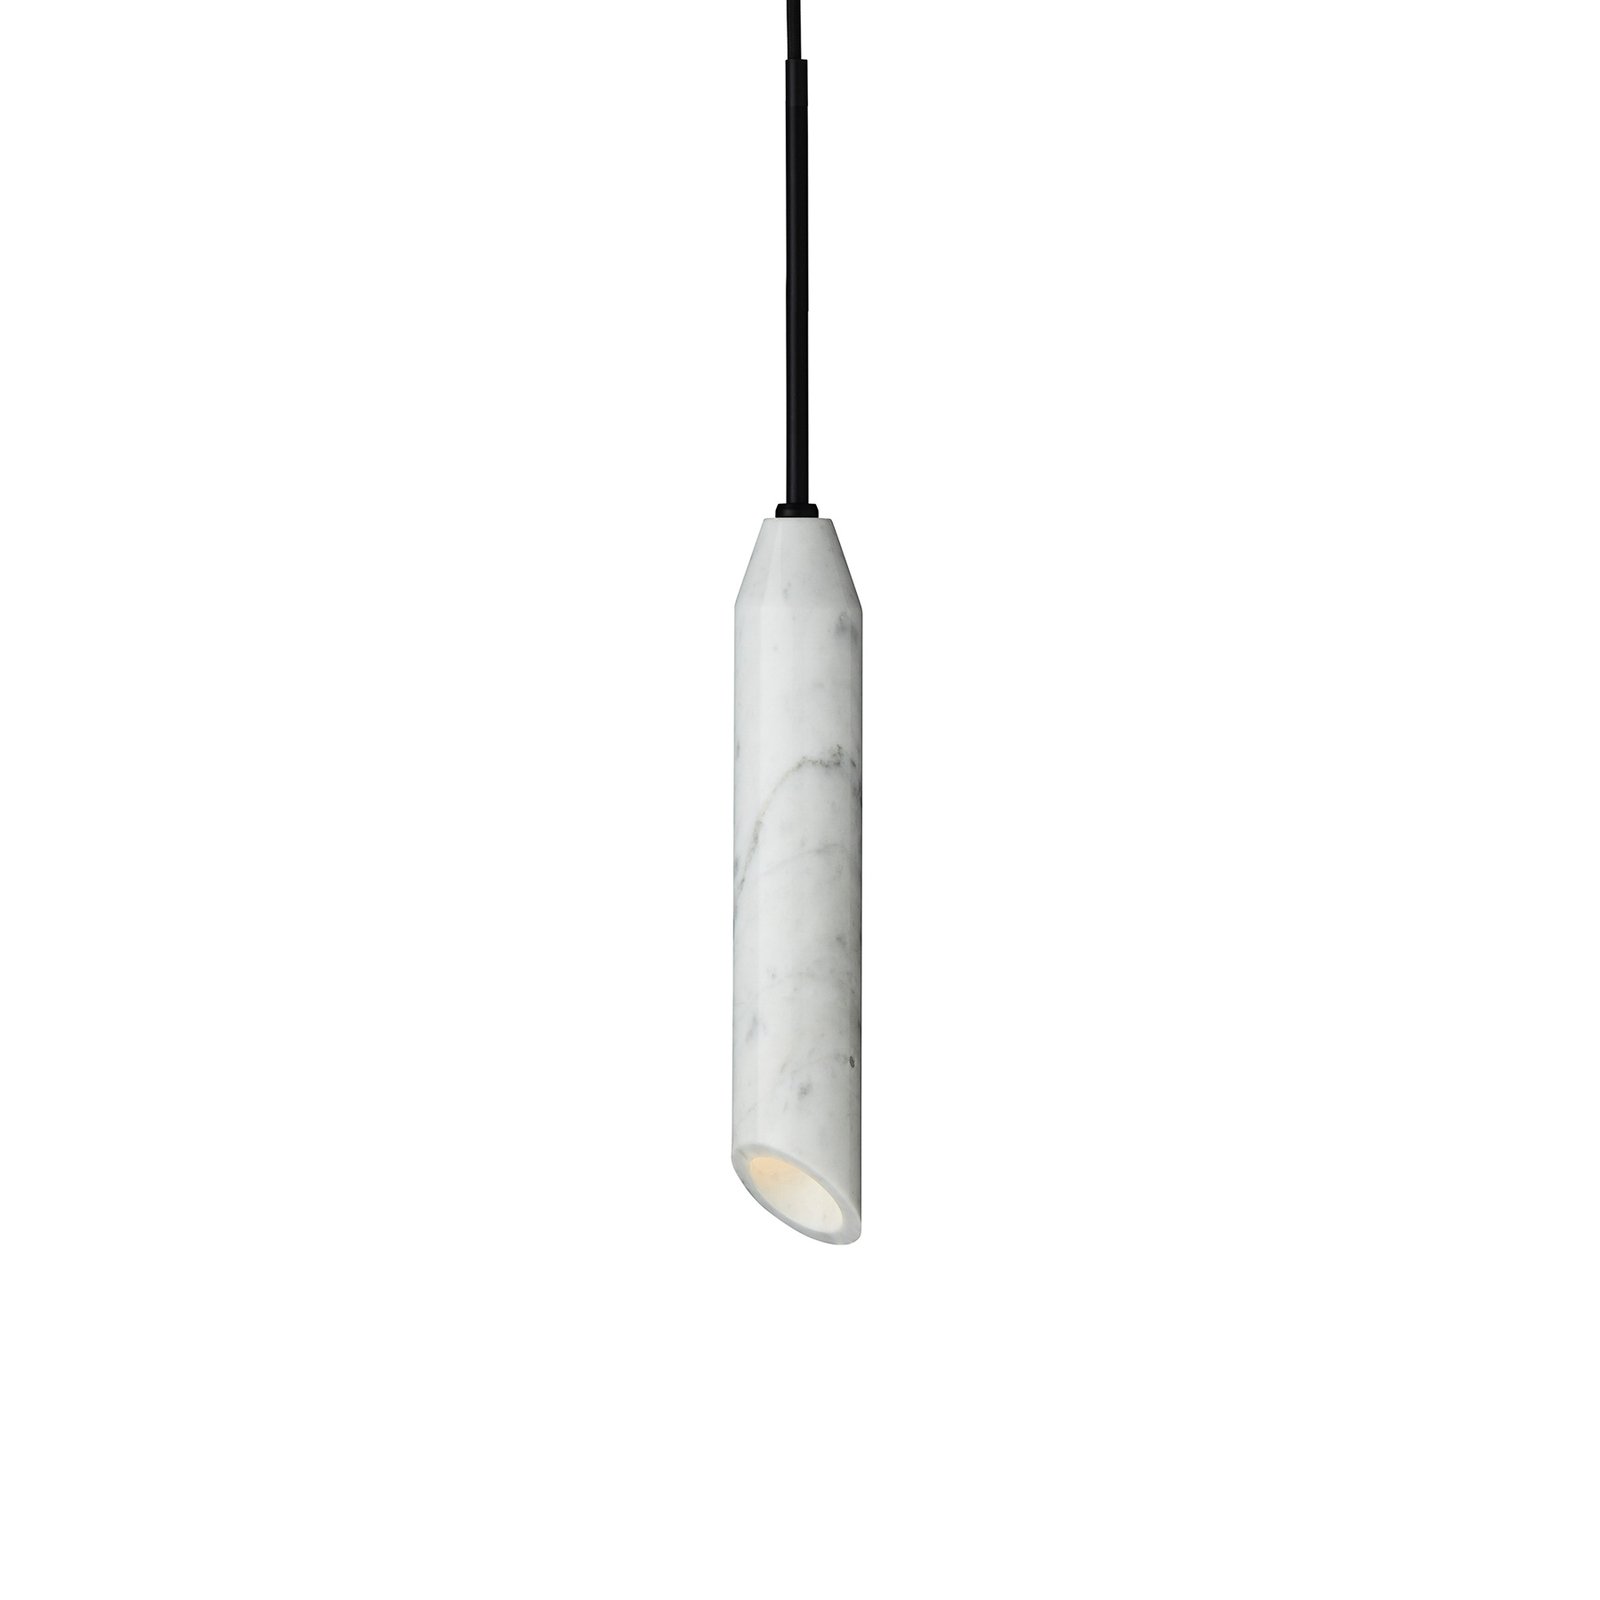 Hanglamp Marble Art, wit, Carrara marmer, hoogte 30 cm